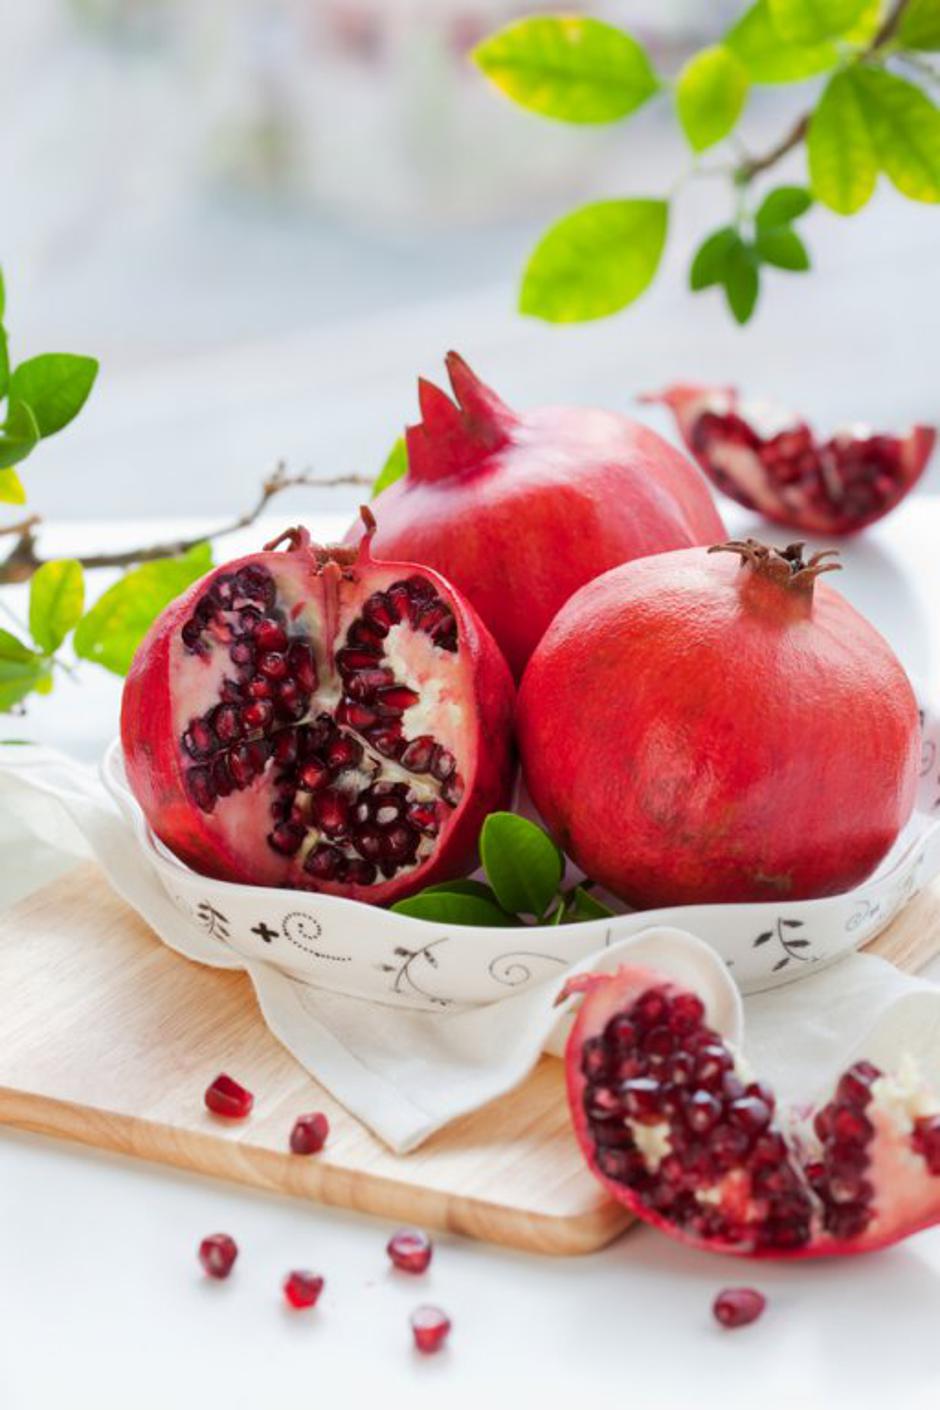 granatno jabolko | Avtor: Shutterstock